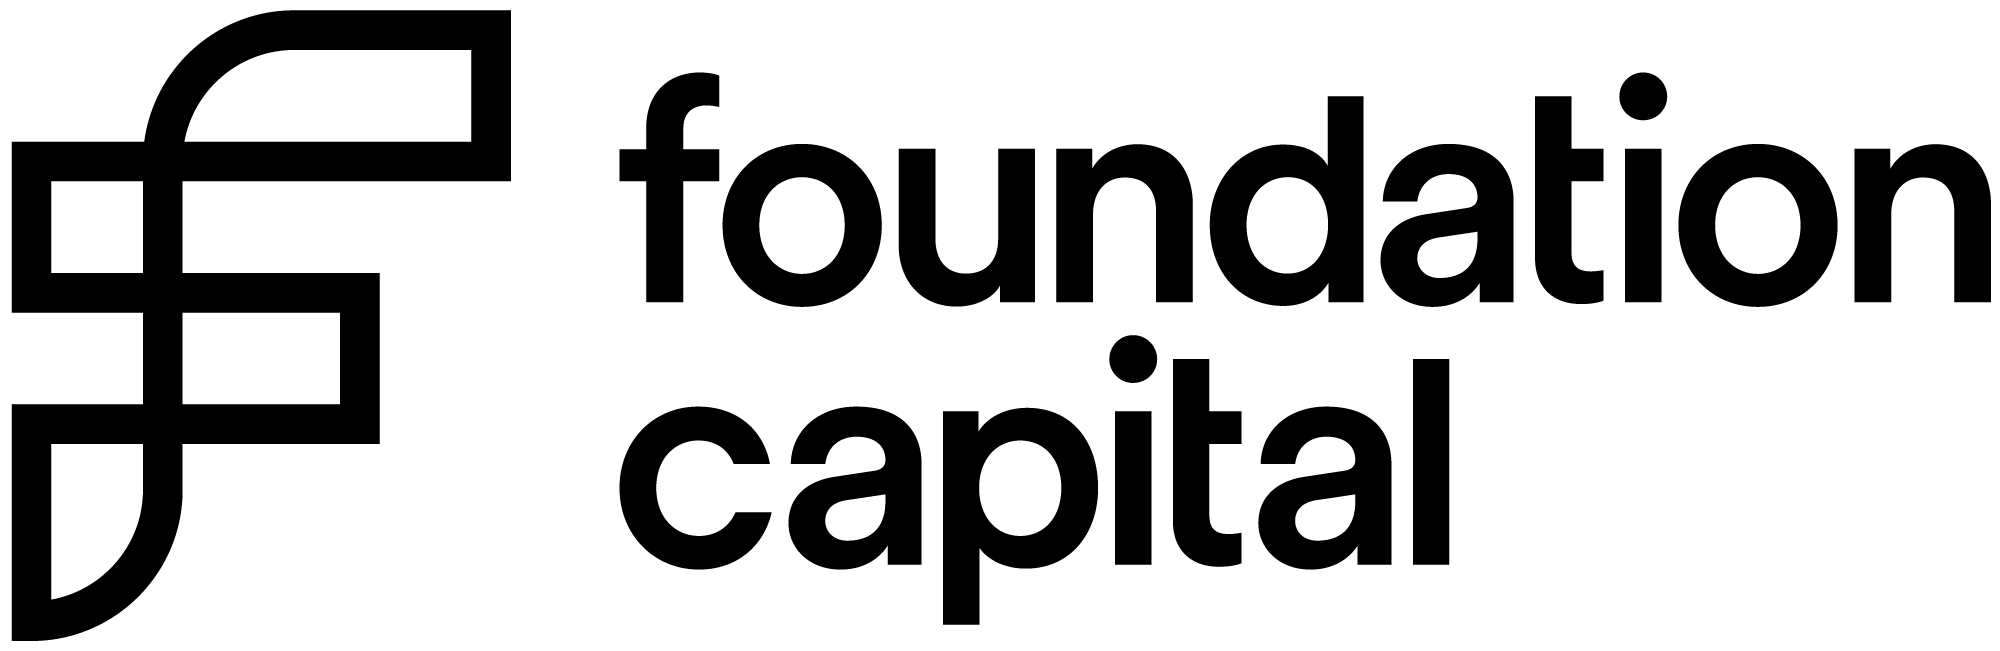 Black Logo of Foundation Capital 